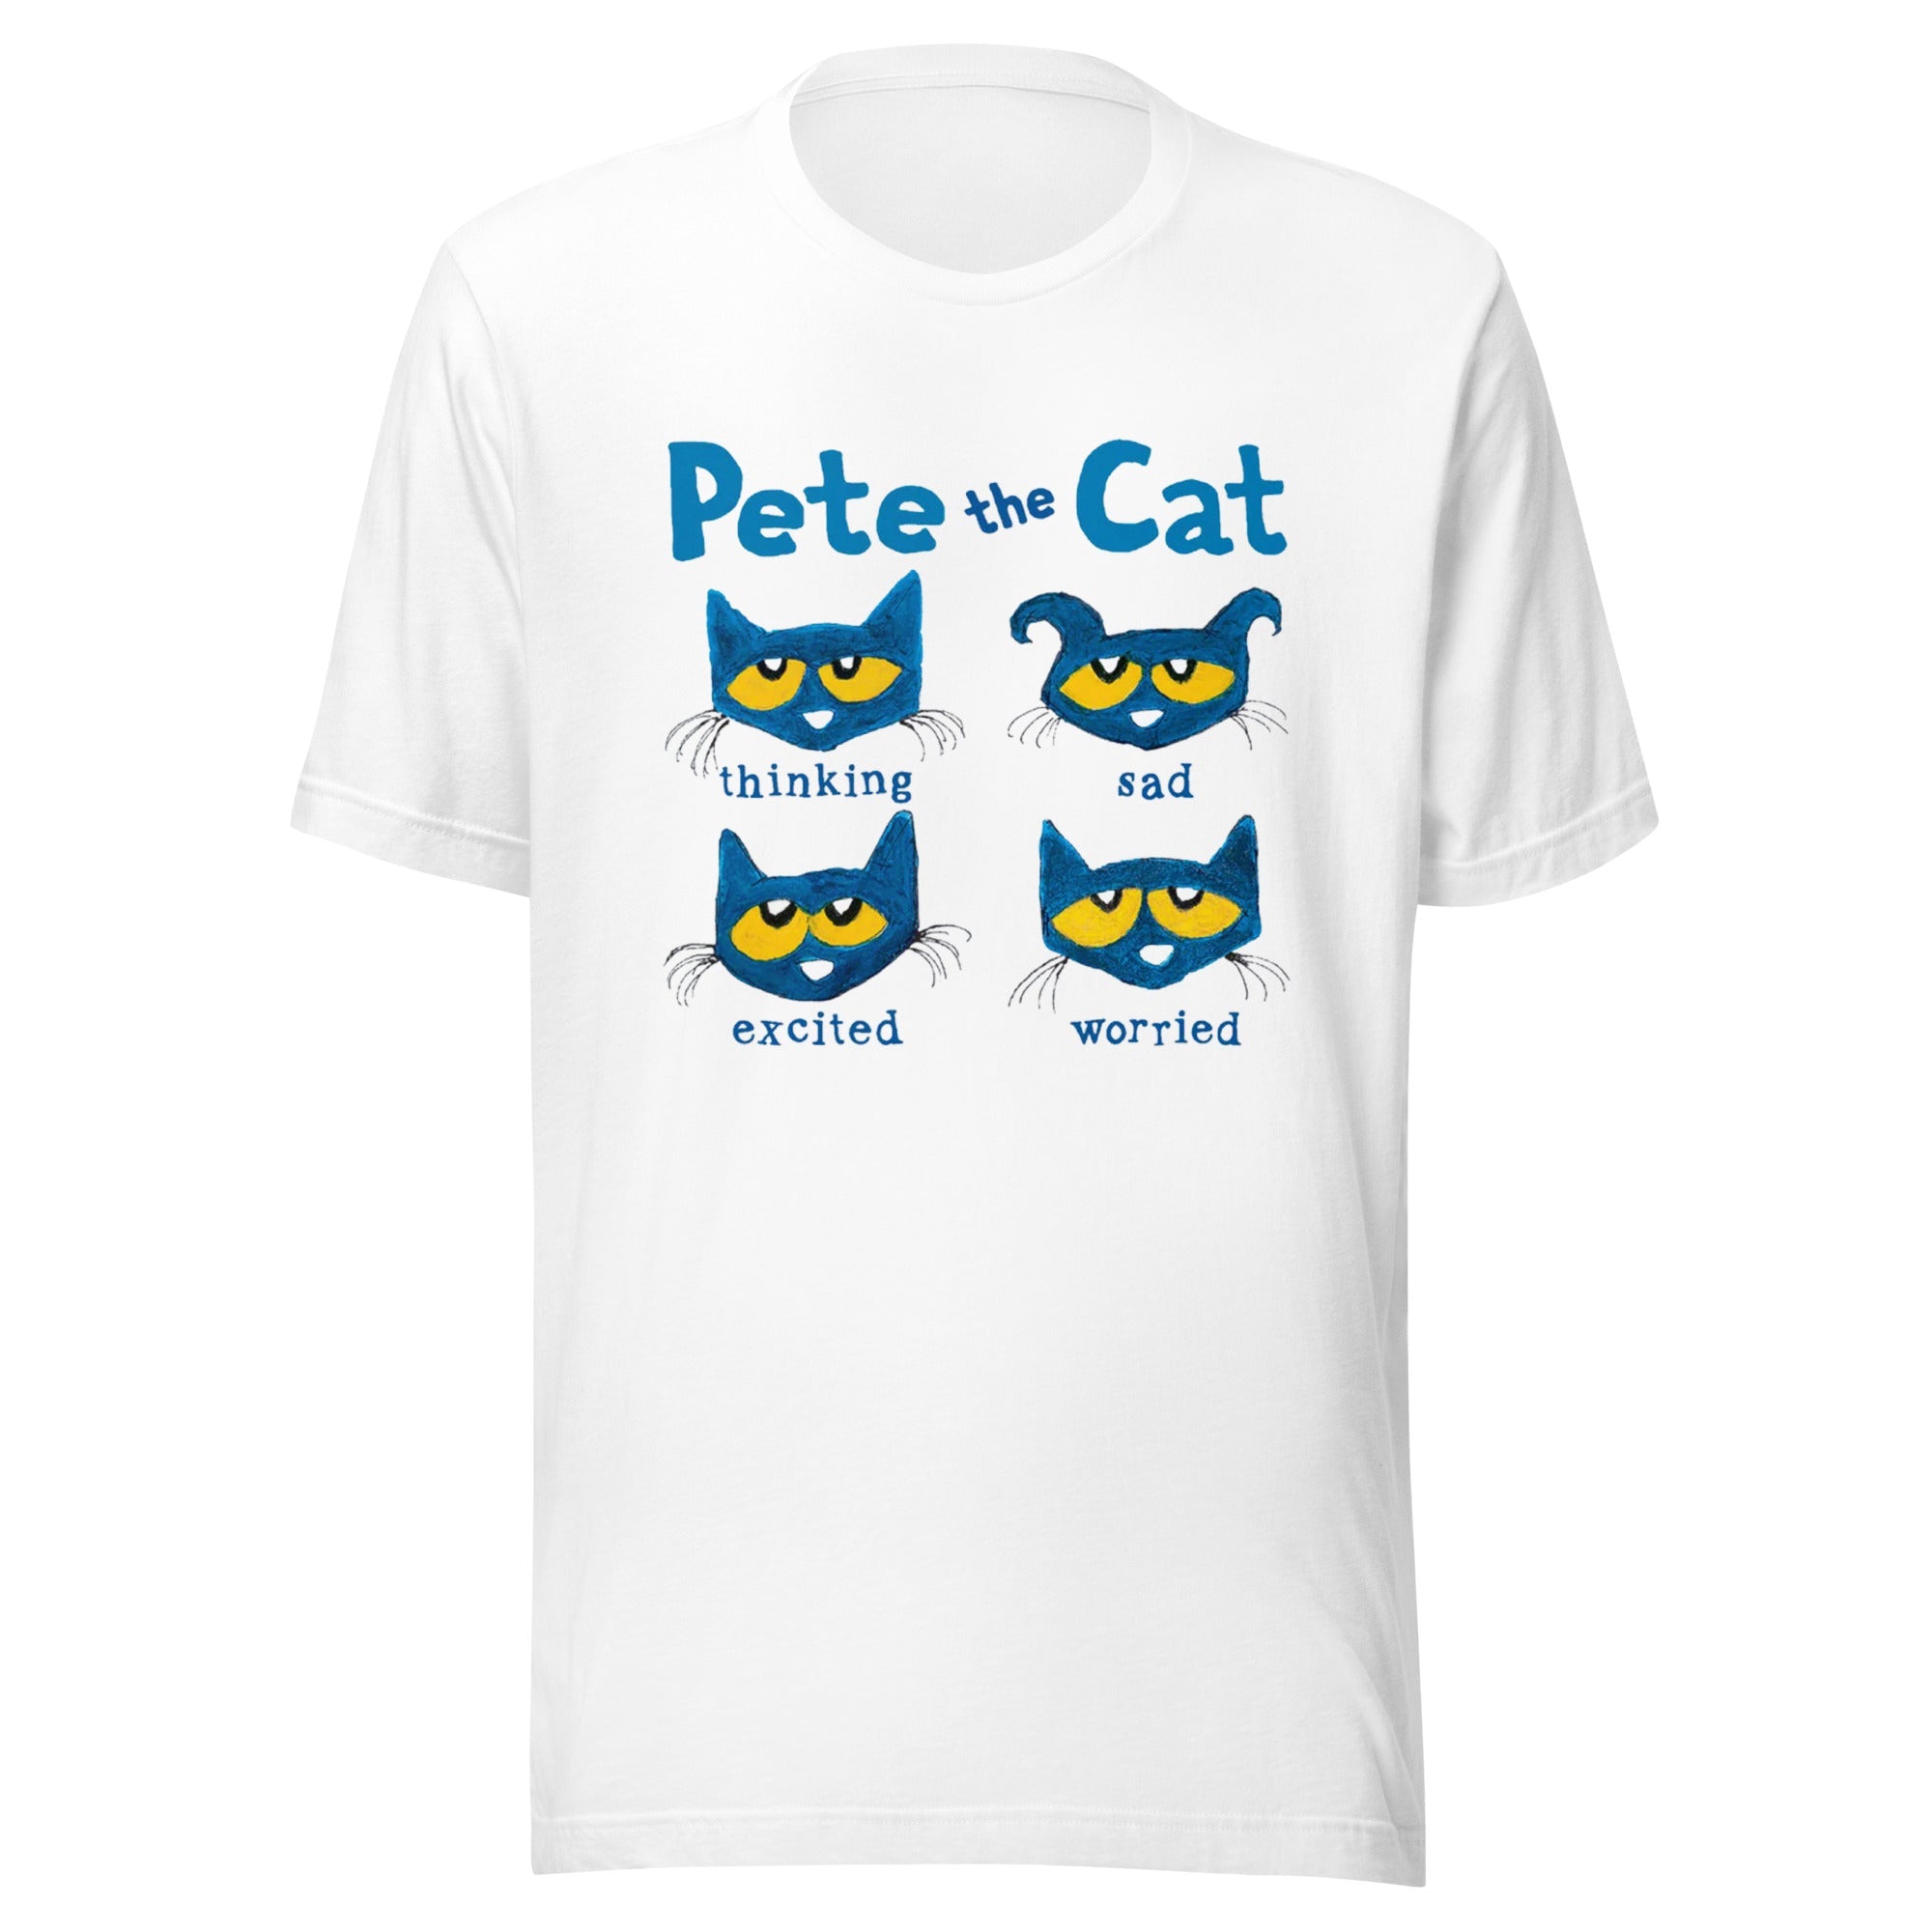 Pete the Cat shirt